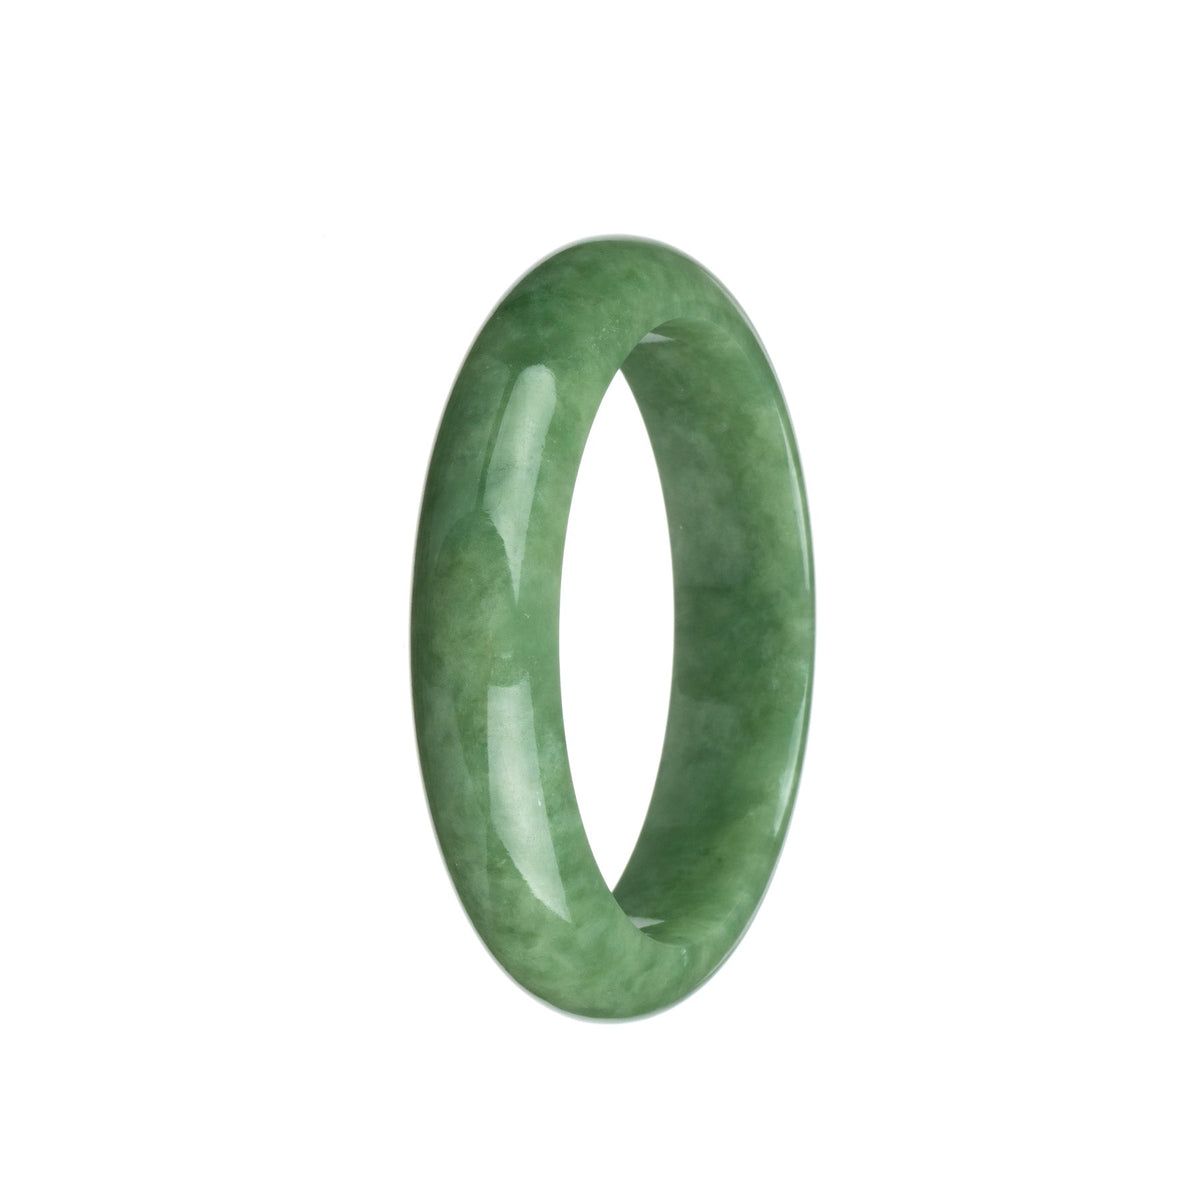 Certified Grade A Green Jadeite Jade Bangle - 57mm Half Moon